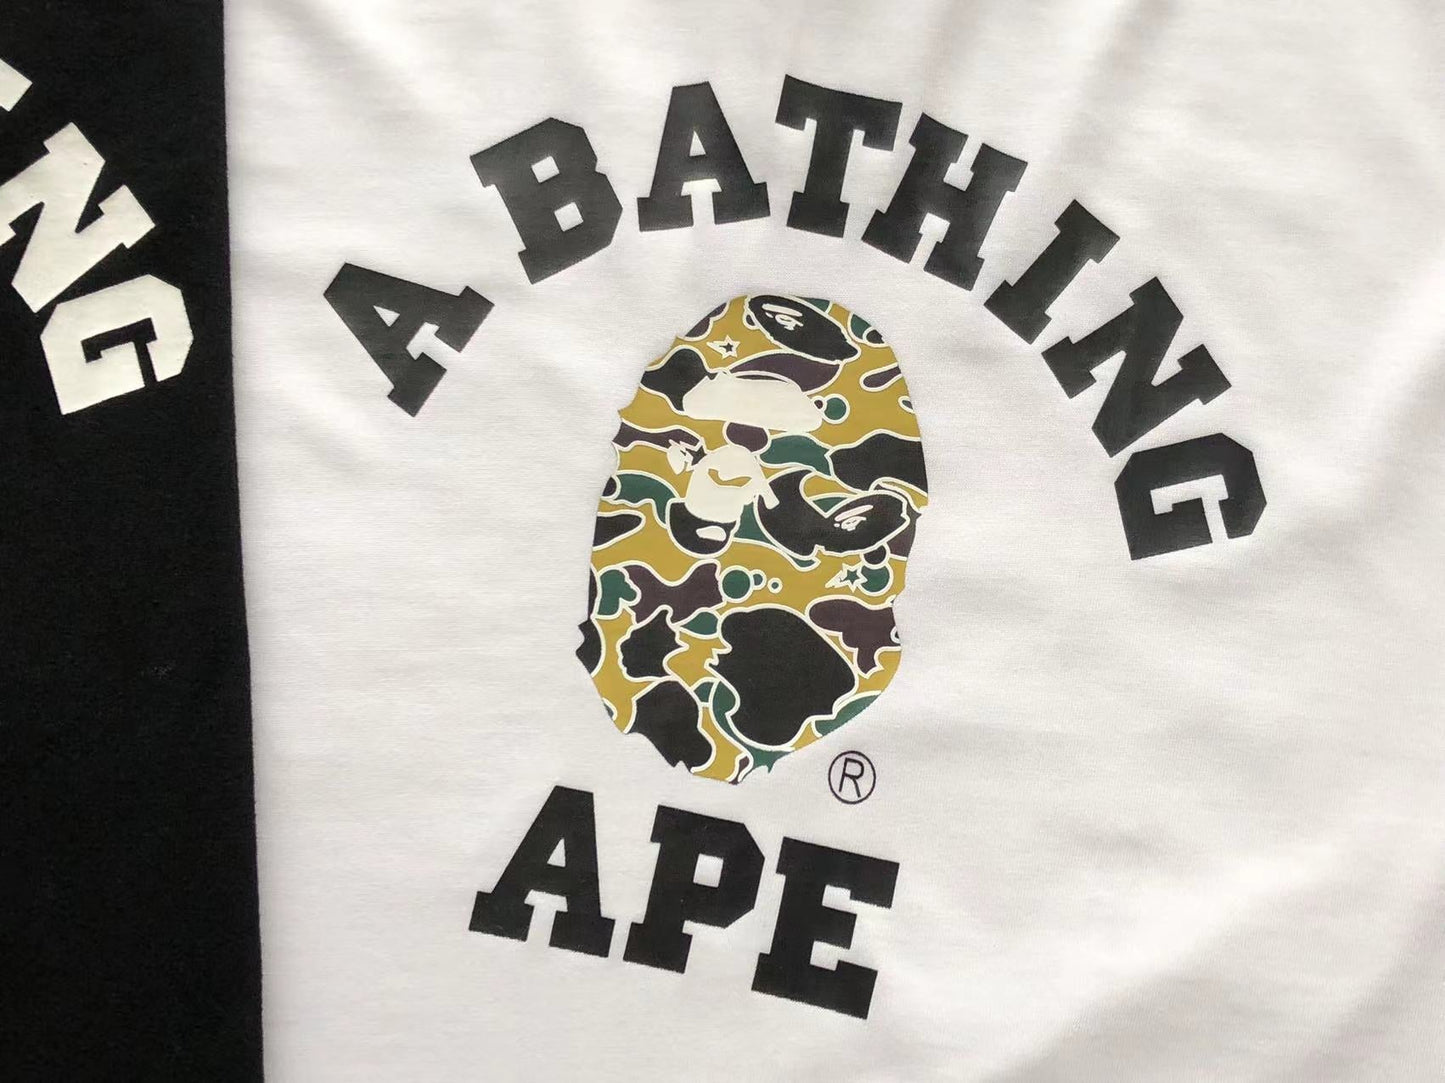 Bathing Ape Bape Tee 149 Hk421118